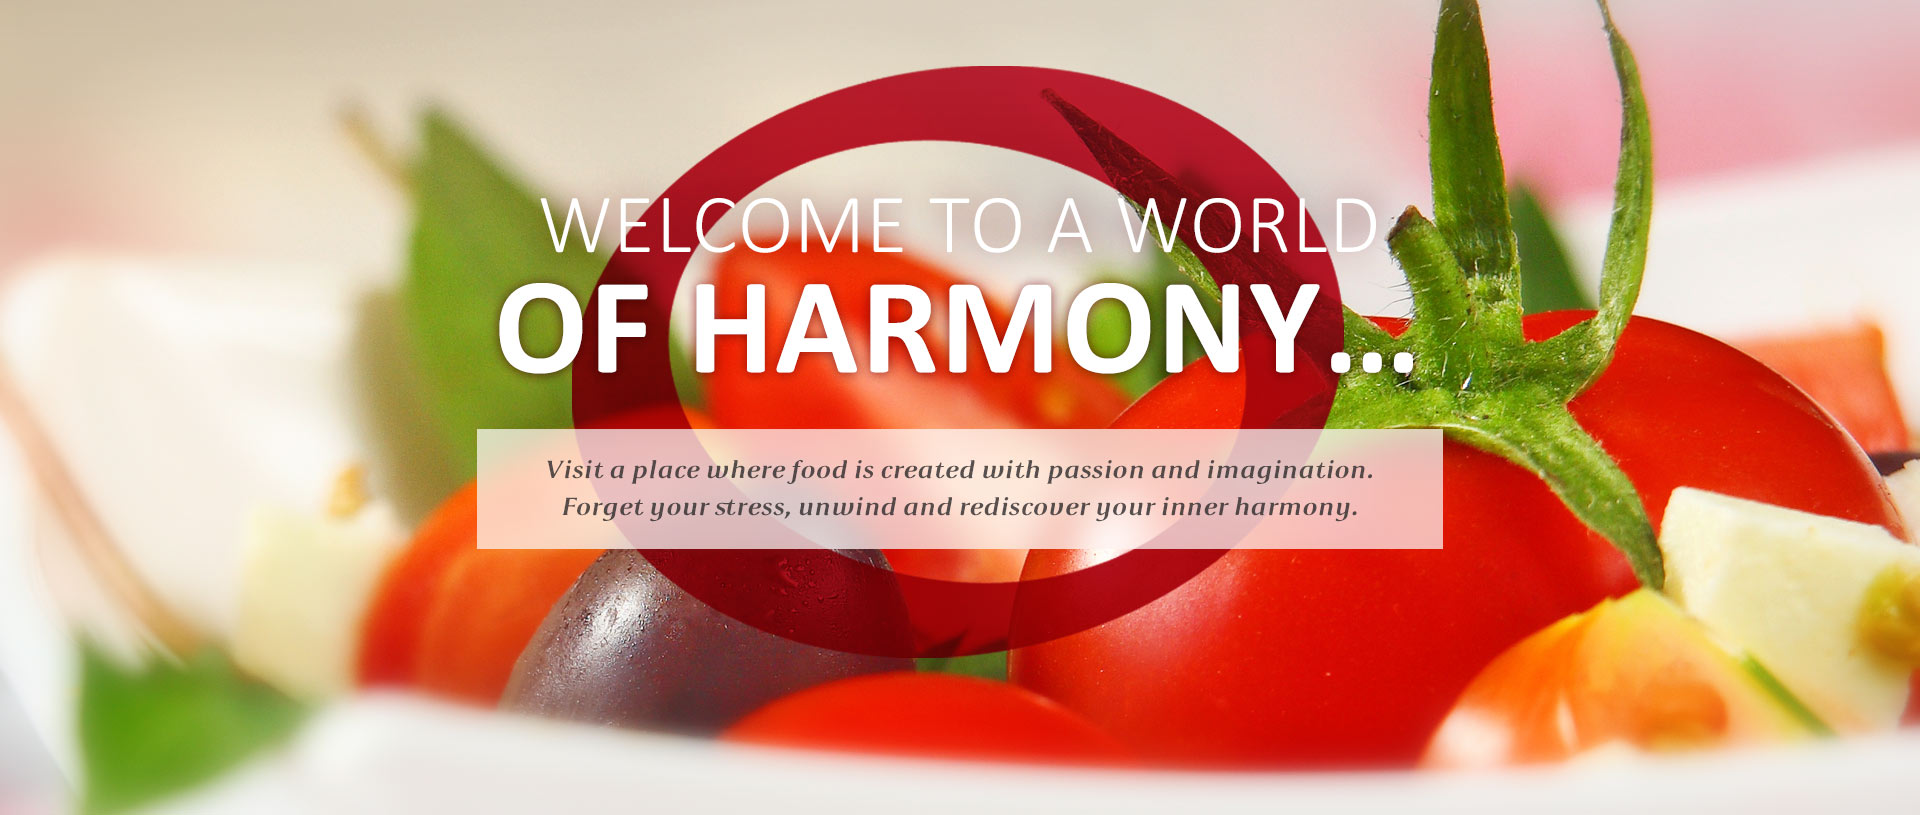 Harmony Restaurant - First slider image